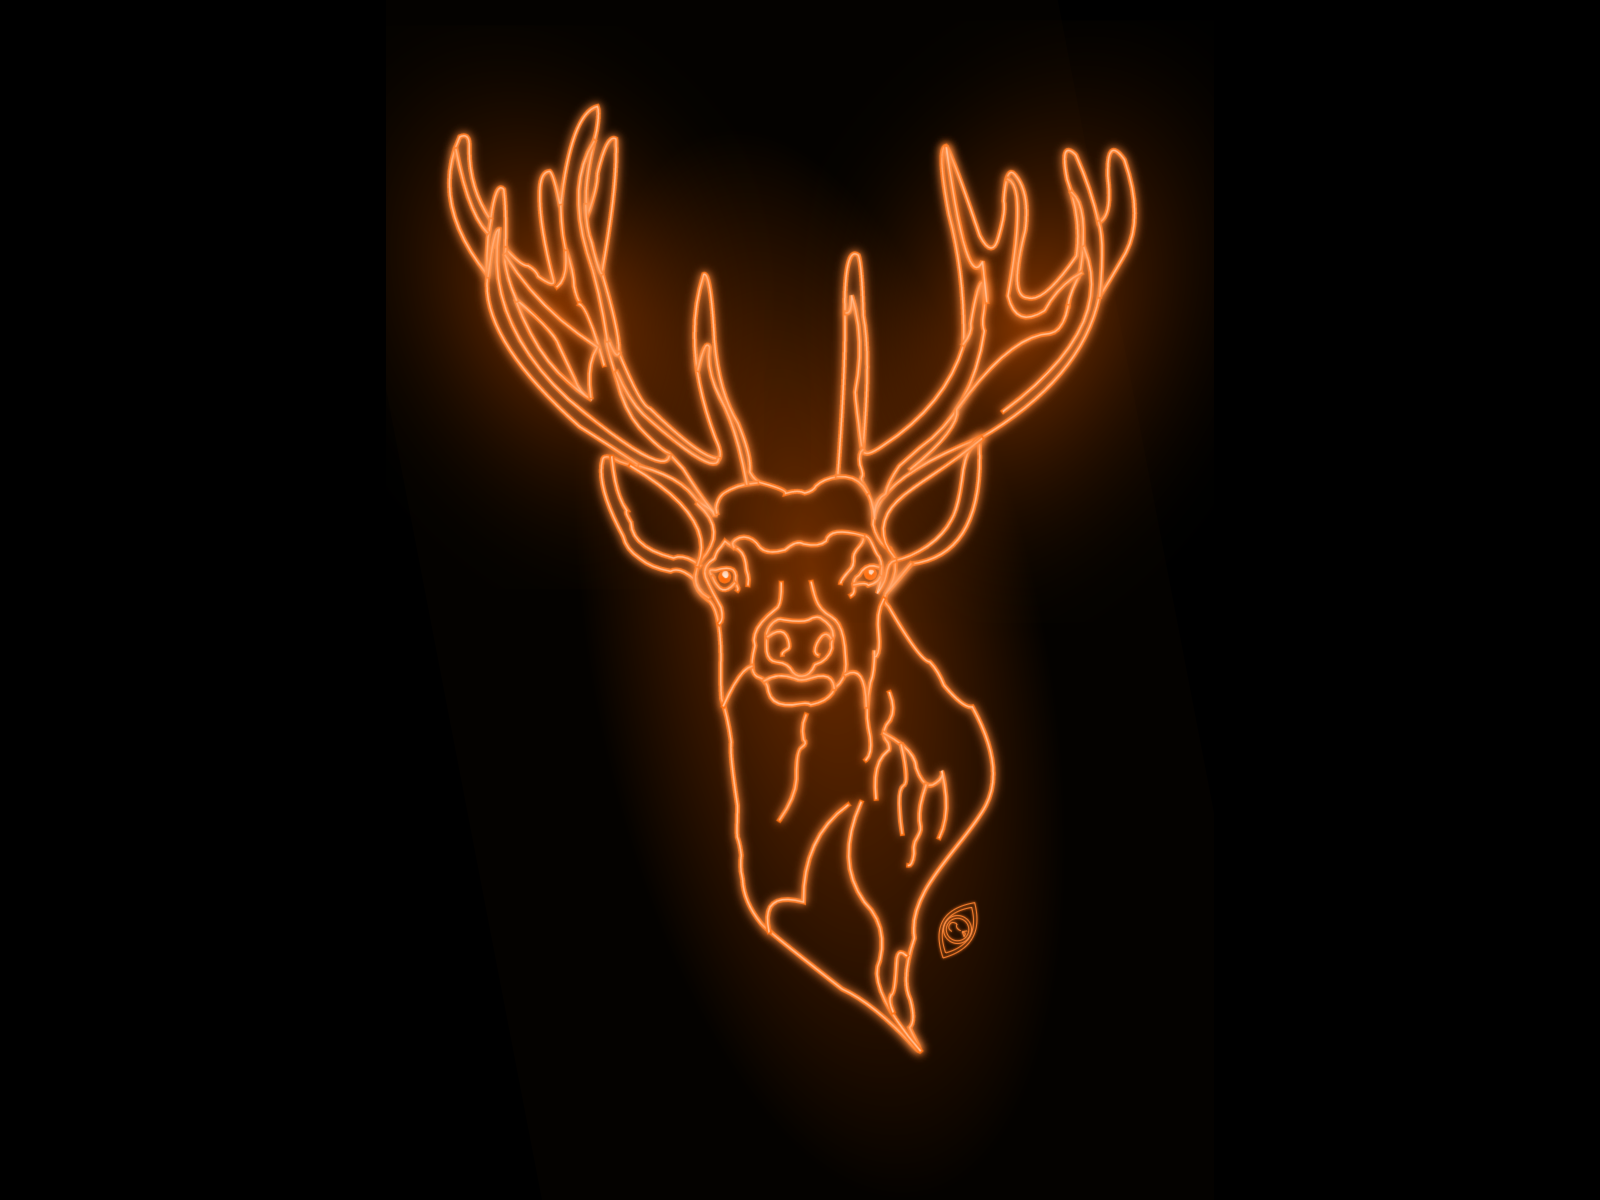 Neon Deer Wallpaper by Luis Angeles ✪‌ on Dribbble